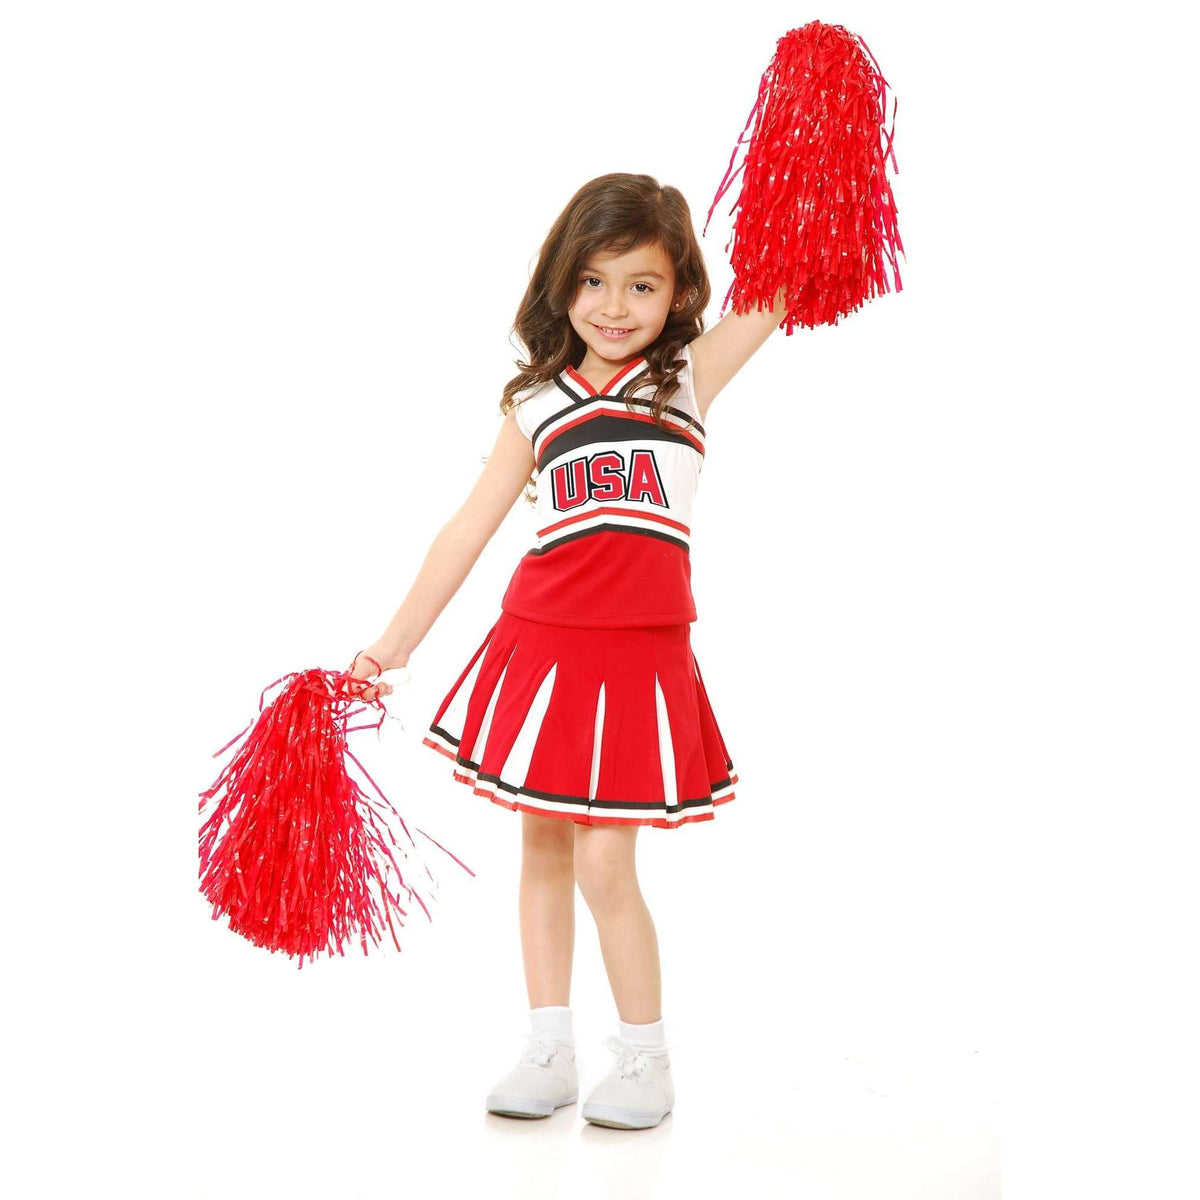 USA Club Cheerleader Child's Costume